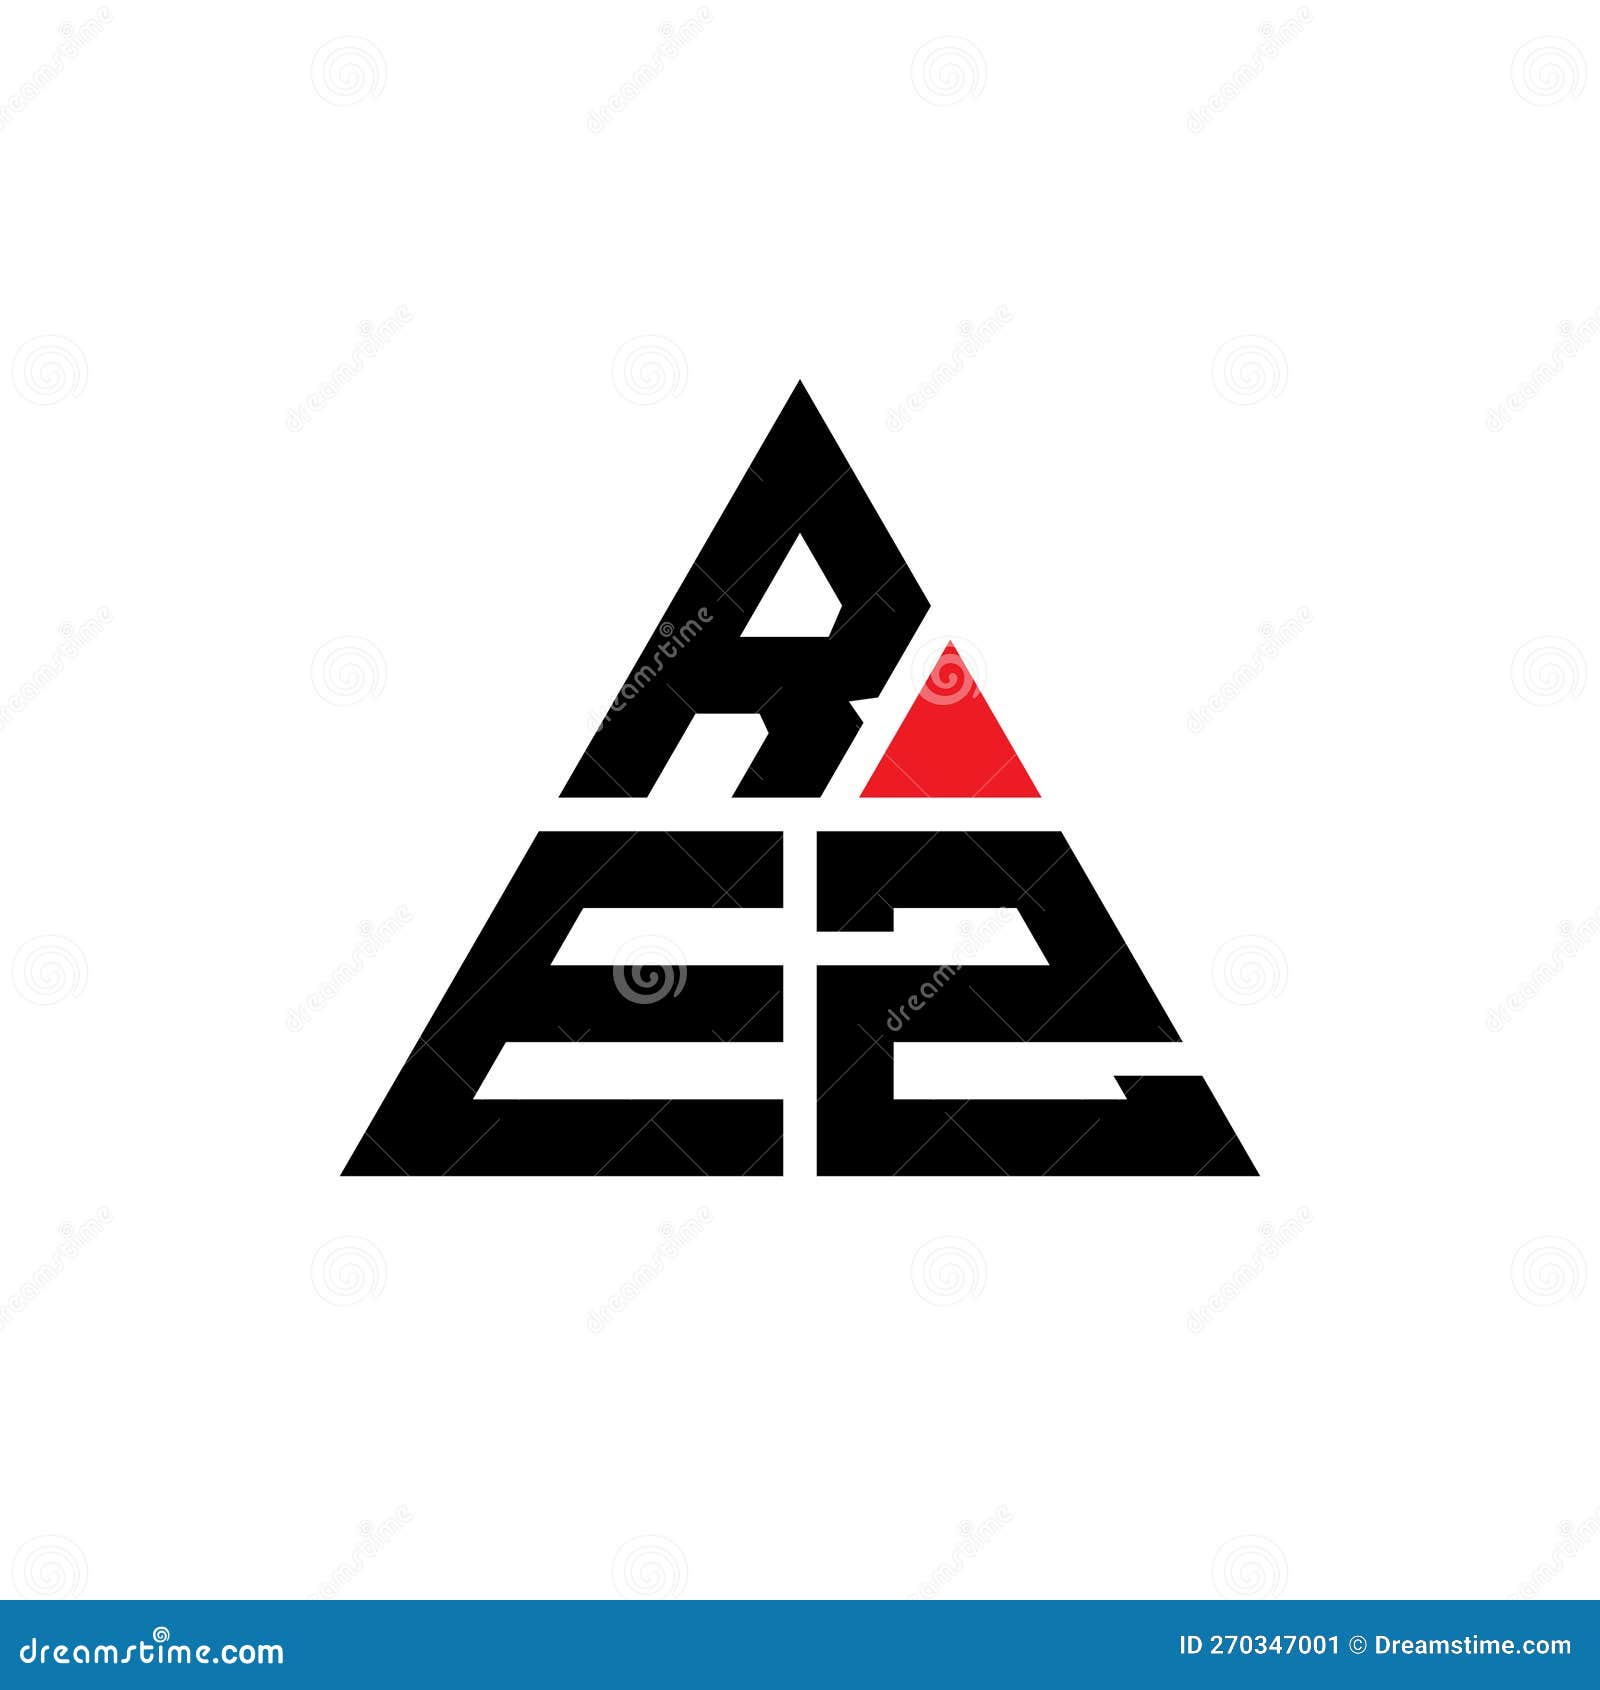 rez triangle letter logo  with triangle . rez triangle logo  monogram. rez triangle  logo template with red